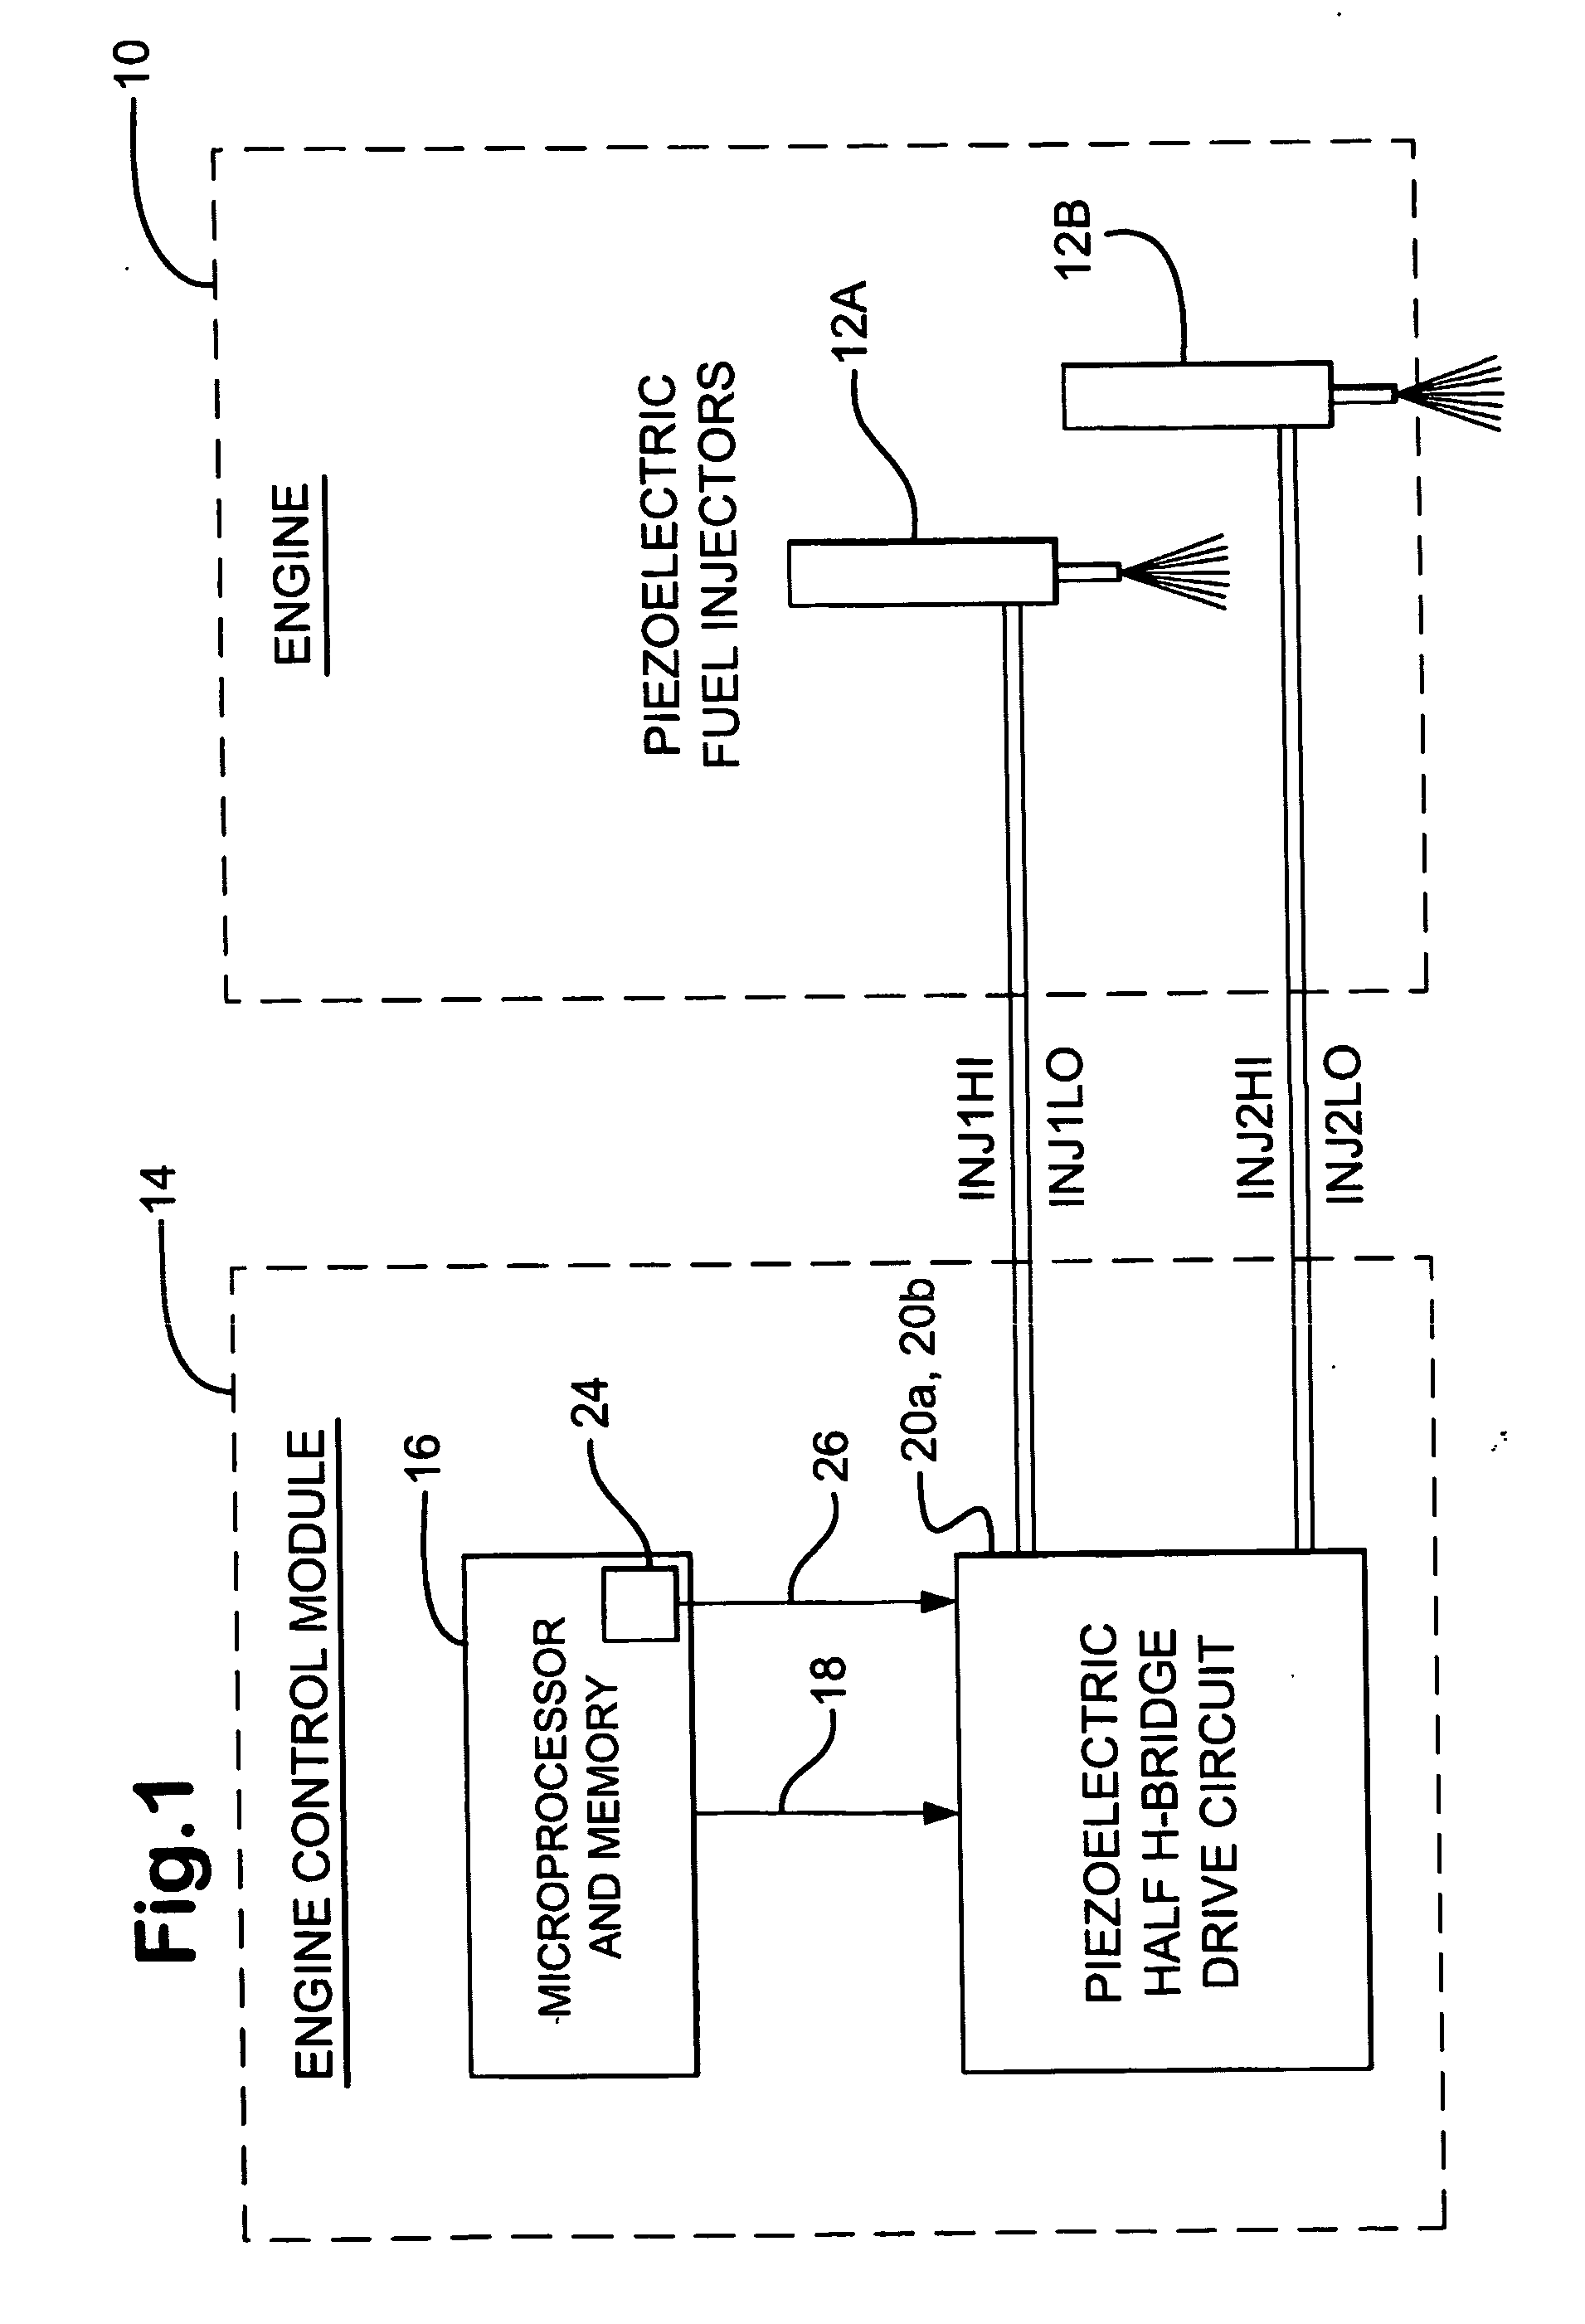 Drive circuit for an injector arrangement